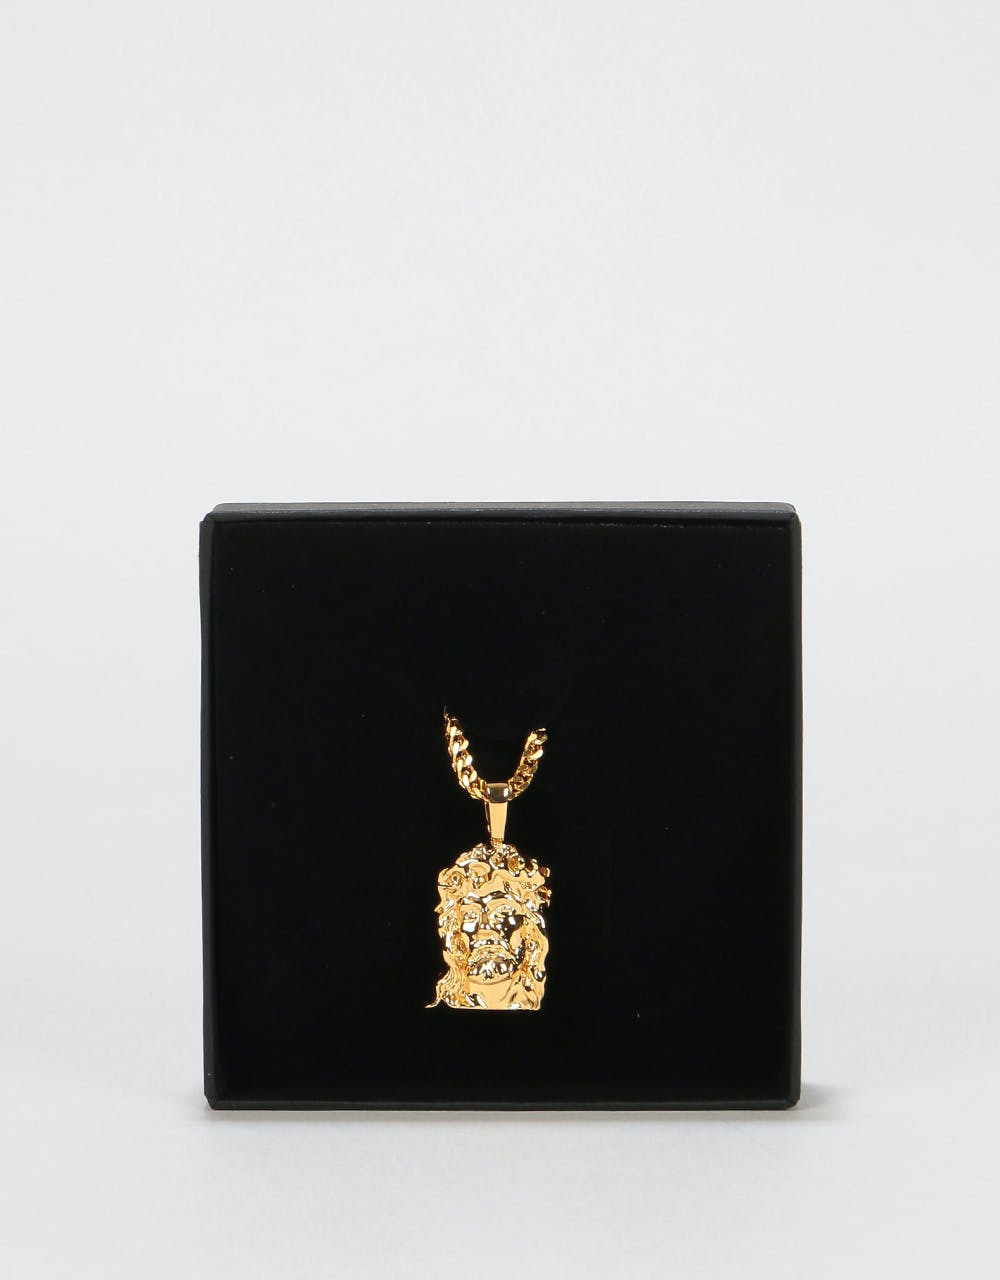 Midvs Co 18K Gold Plated Jesus Piece Necklace - Gold